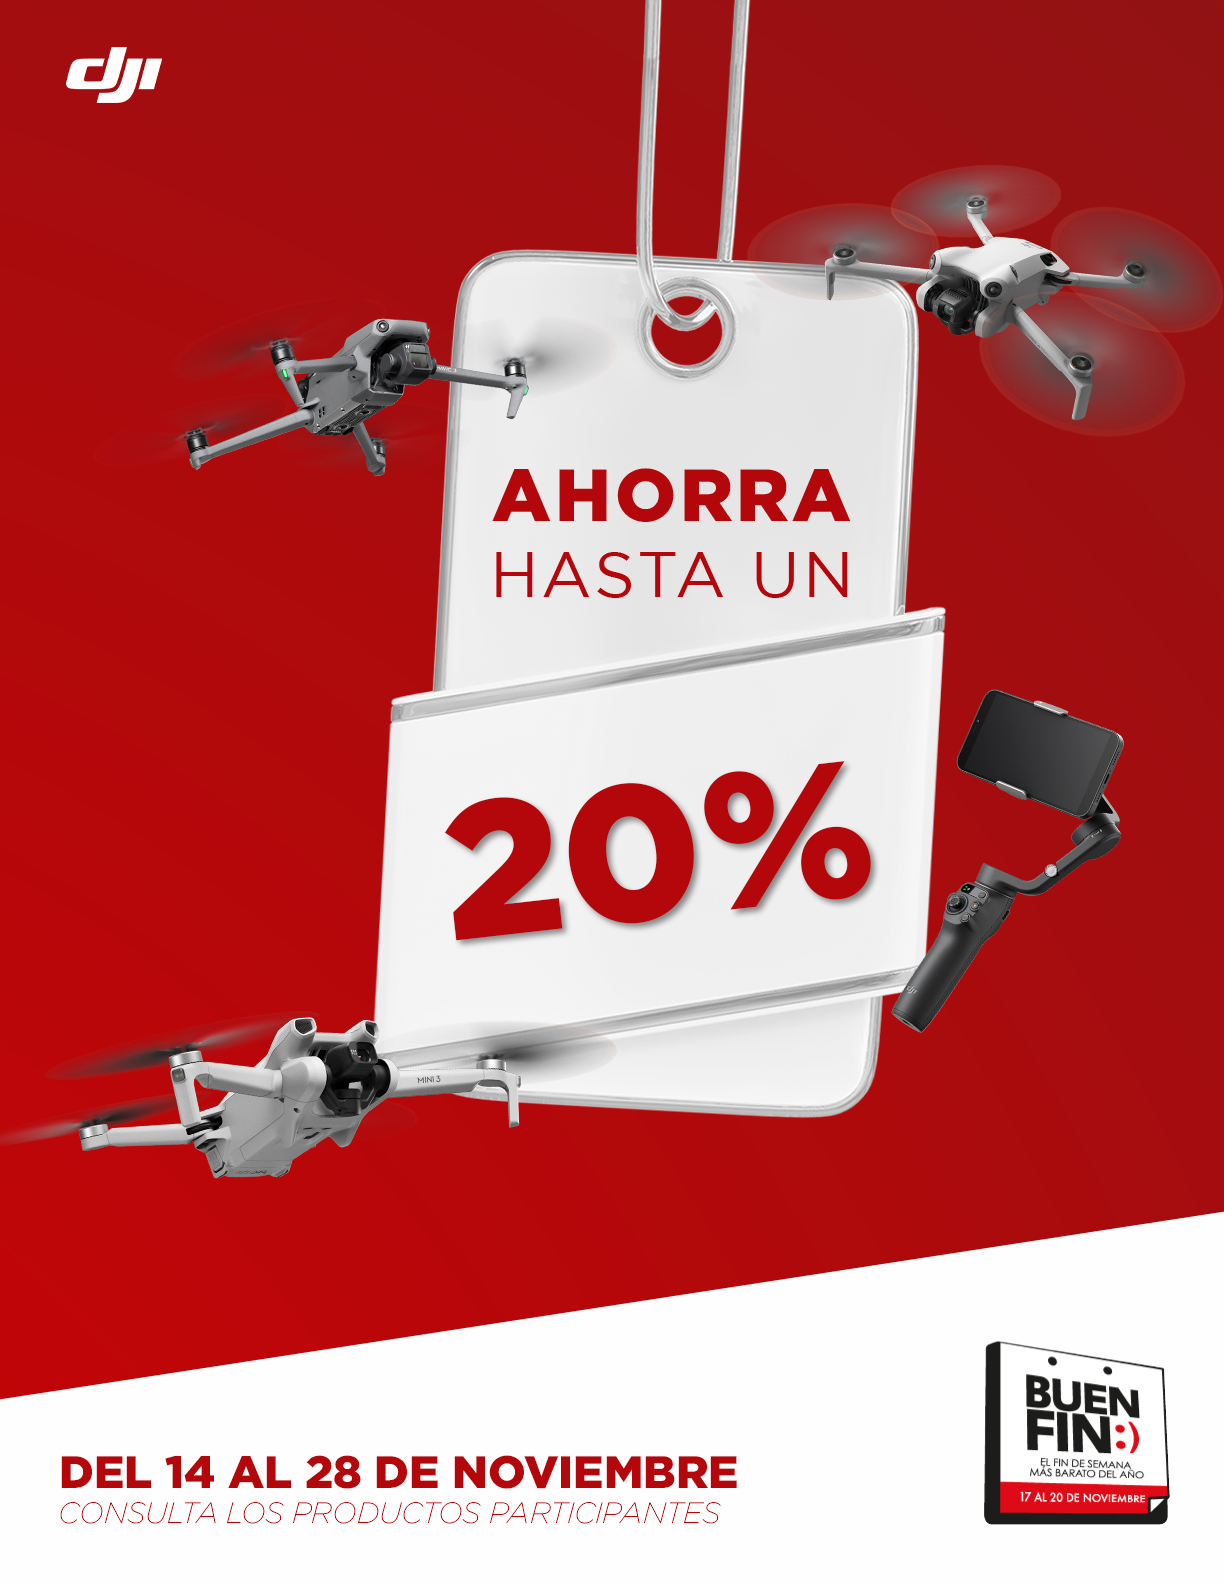 El nuevo dron de bolsillo de DJI llega a México